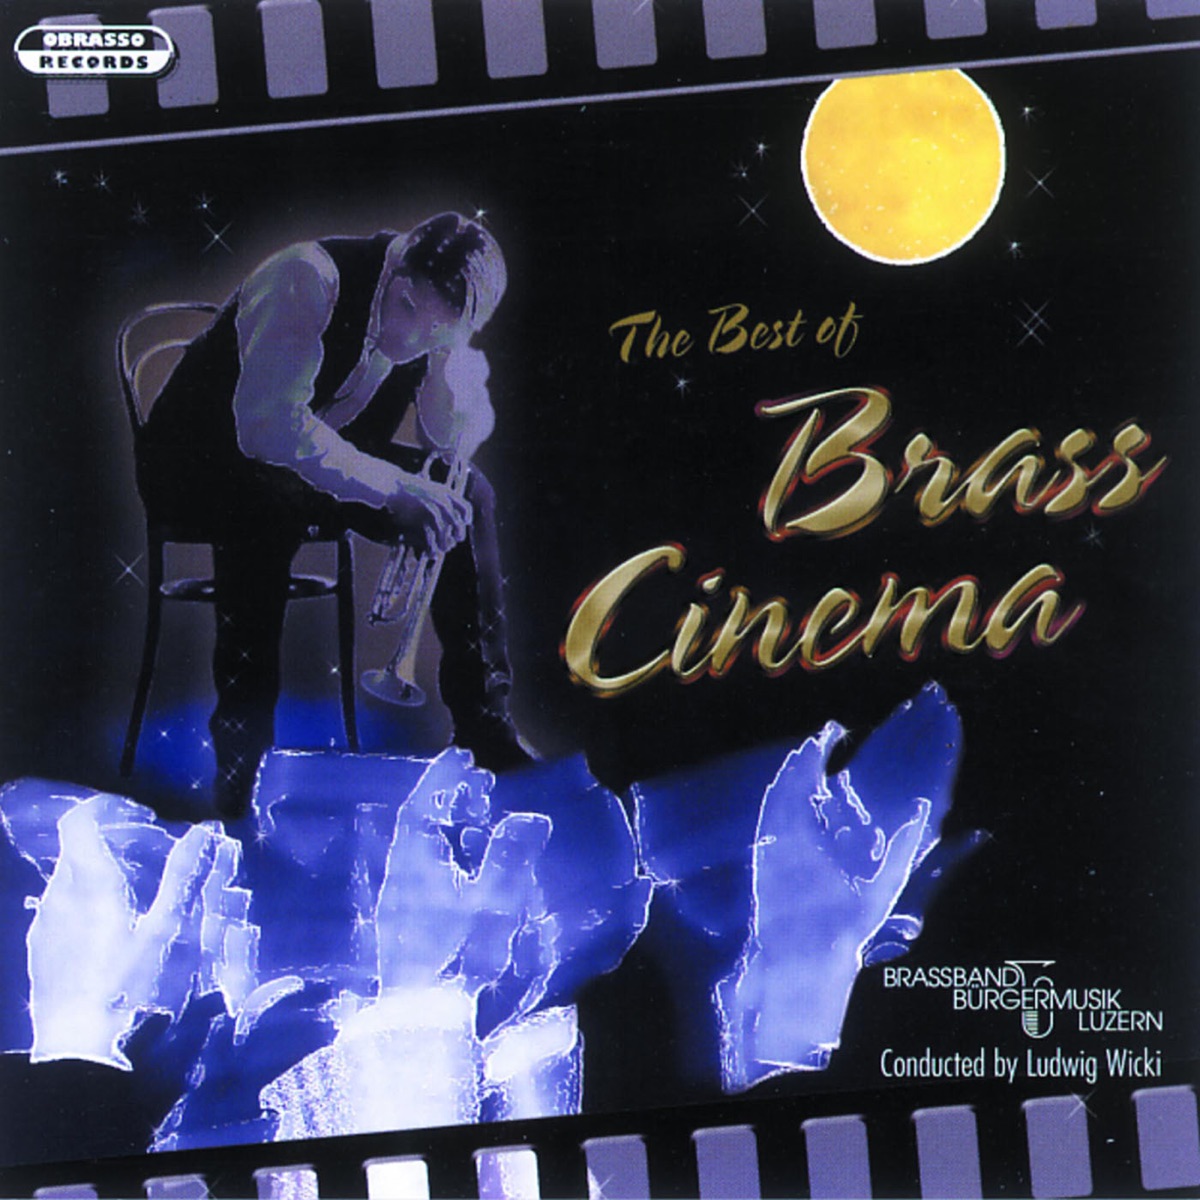 The Best of Brass Cinema (Music Inspired By the Film) - Album by Brass Band  Bürgermusik Luzern & Ludwig Wicki - Apple Music